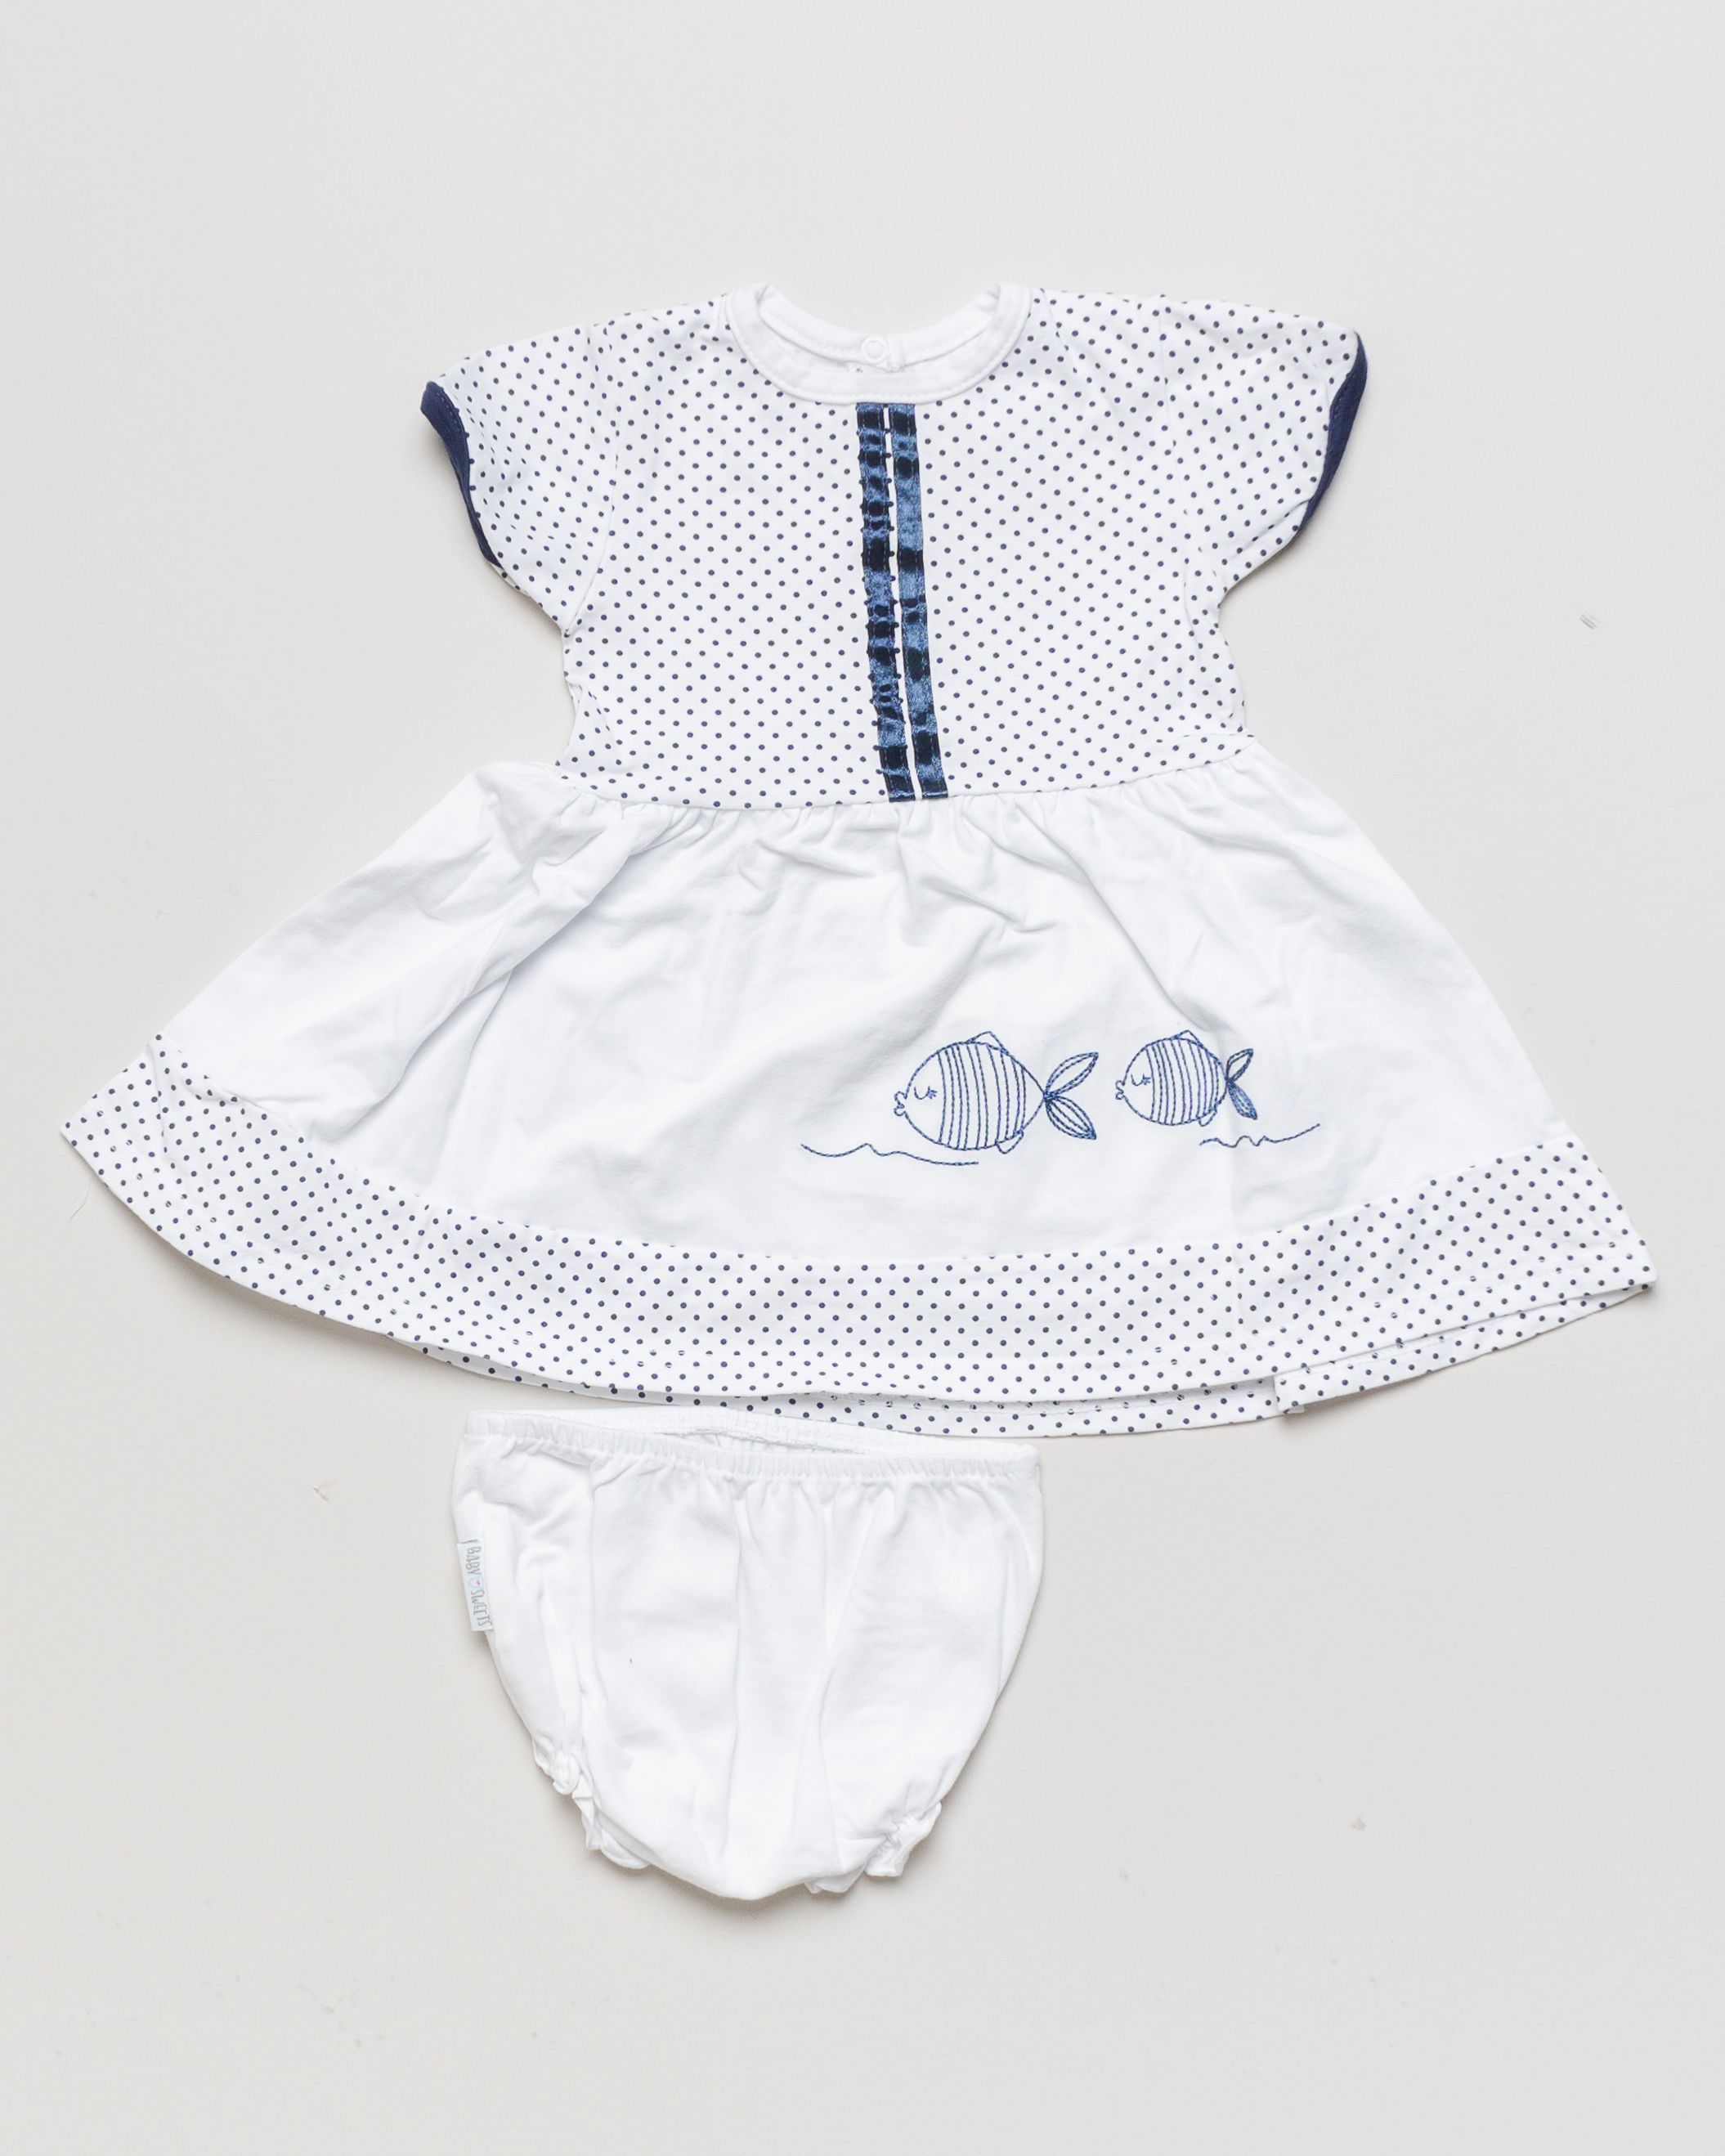 Kleid Gr. 74 – Maritim Fische weiß blau Kombi Outfit Set Pack